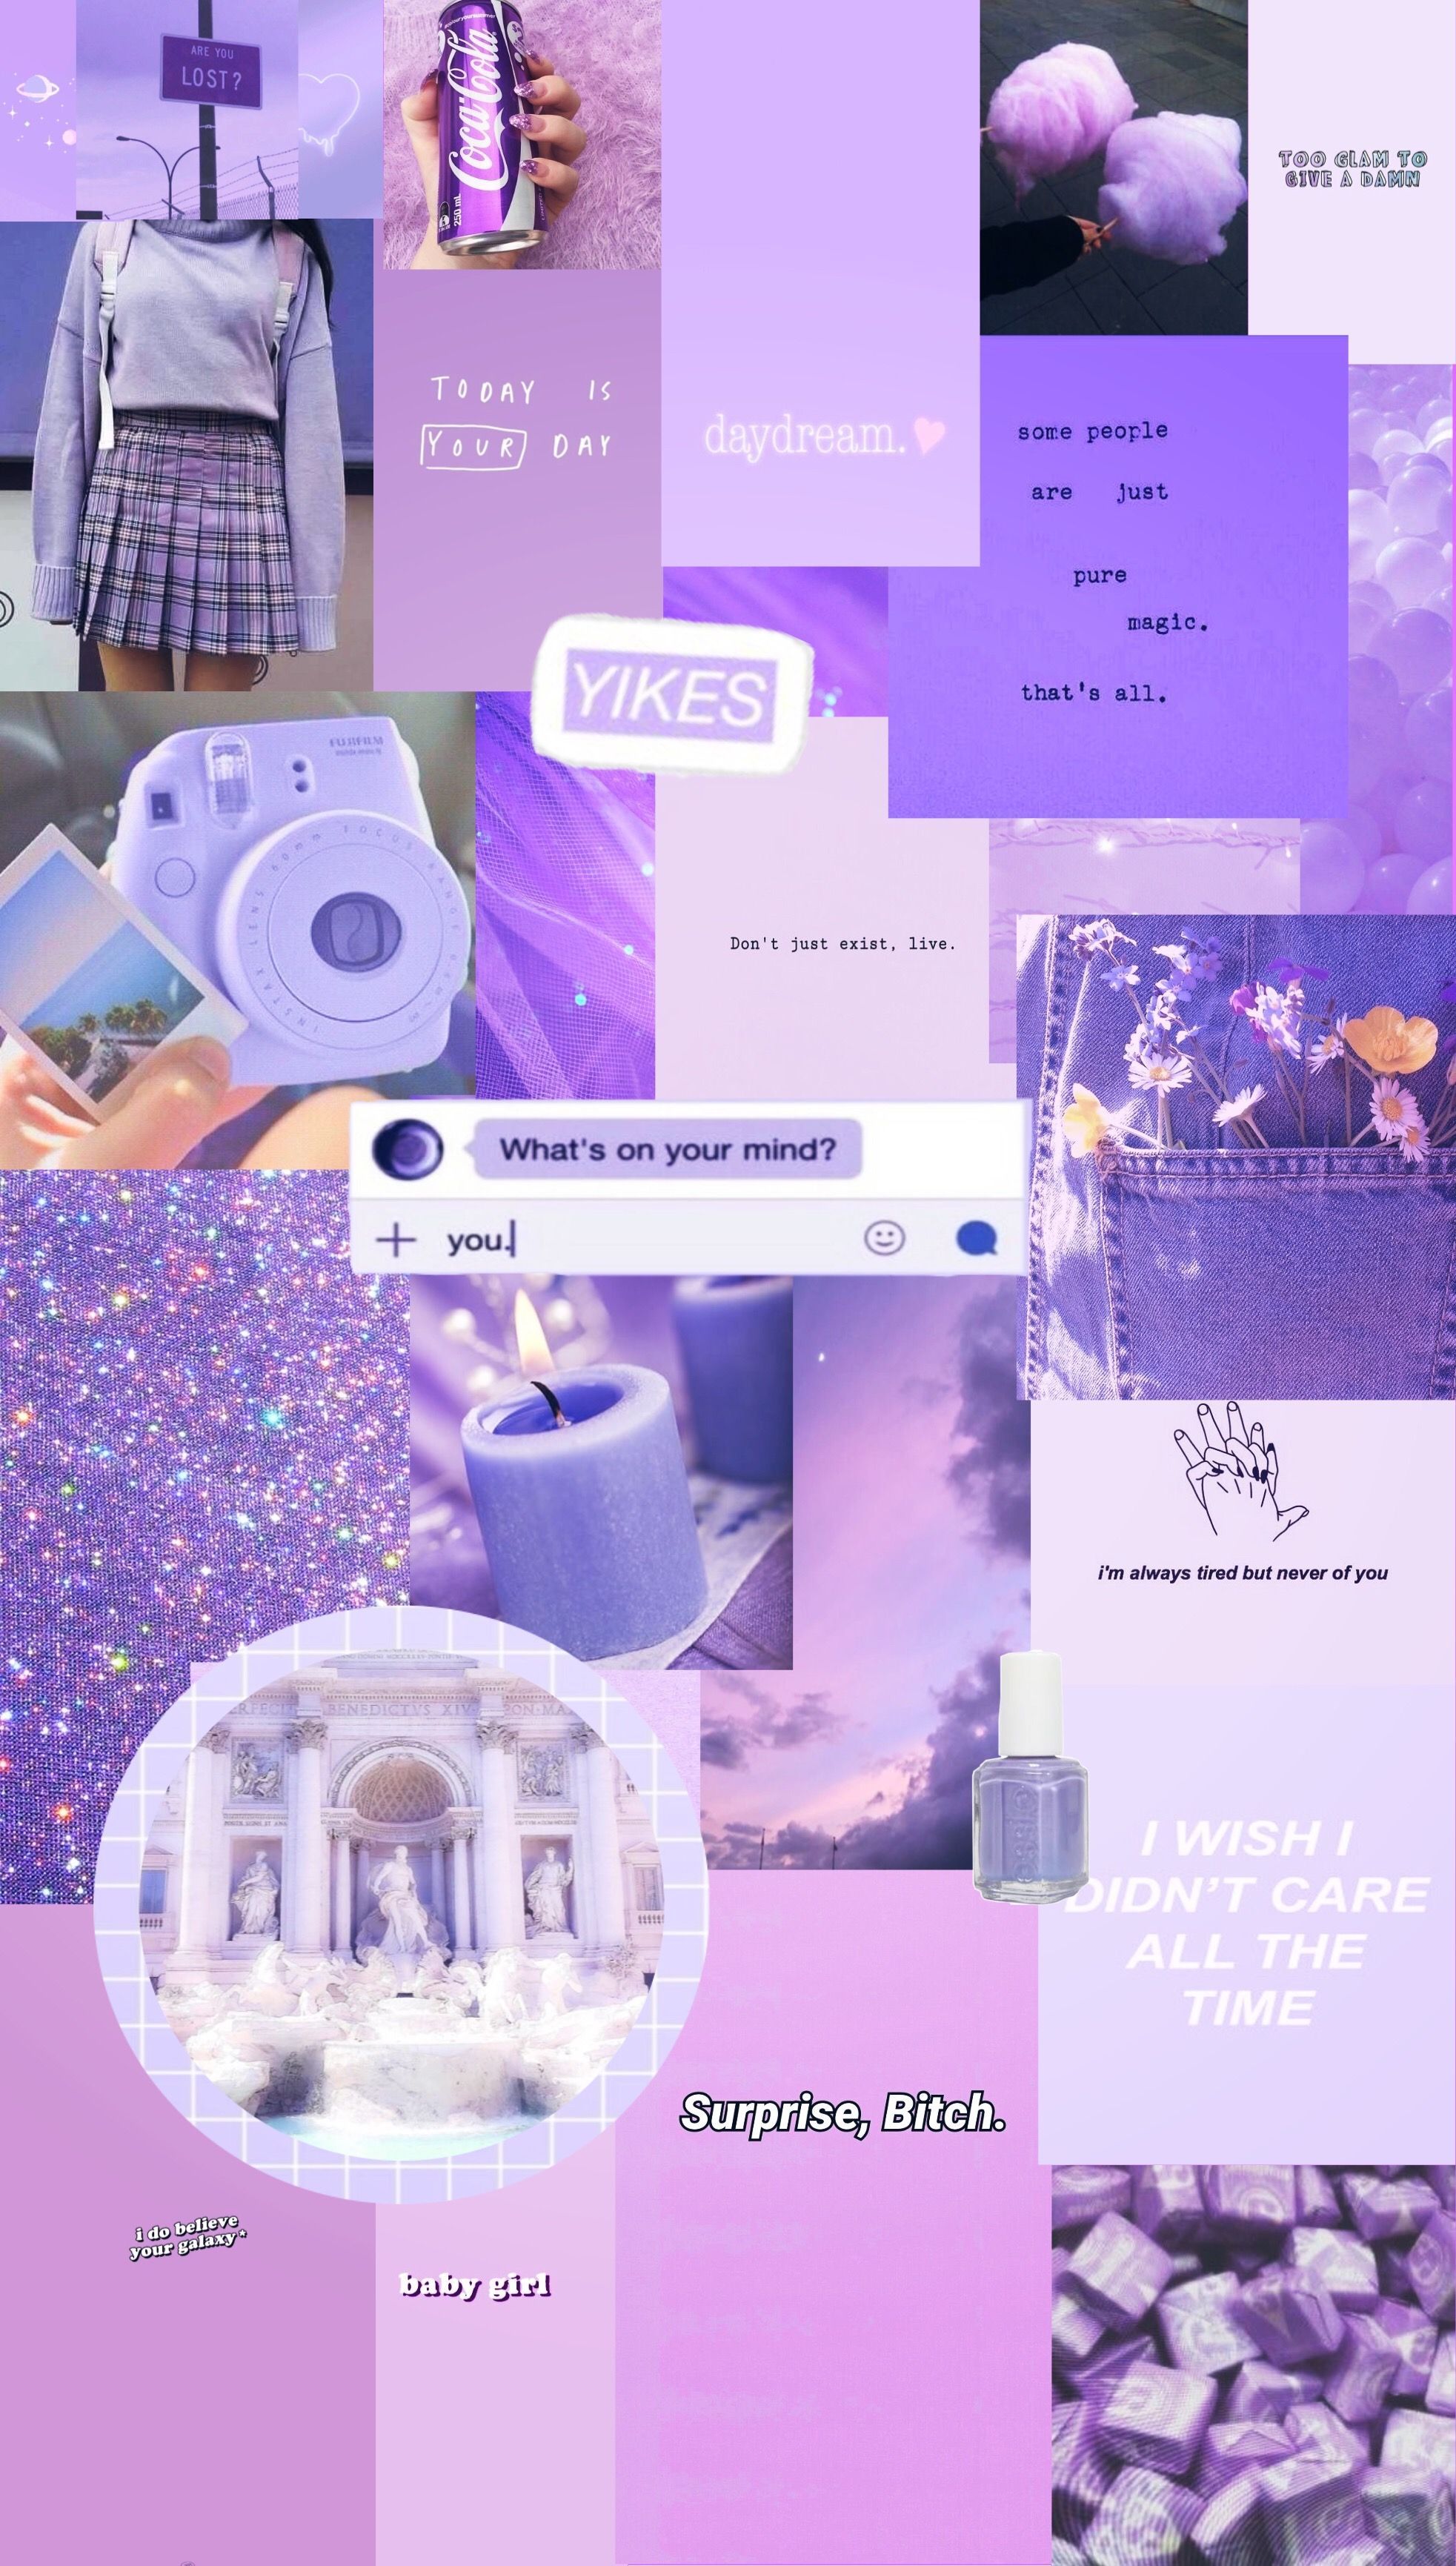 Aesthetic purple collage background for phone - Light purple, purple, cute purple, violet